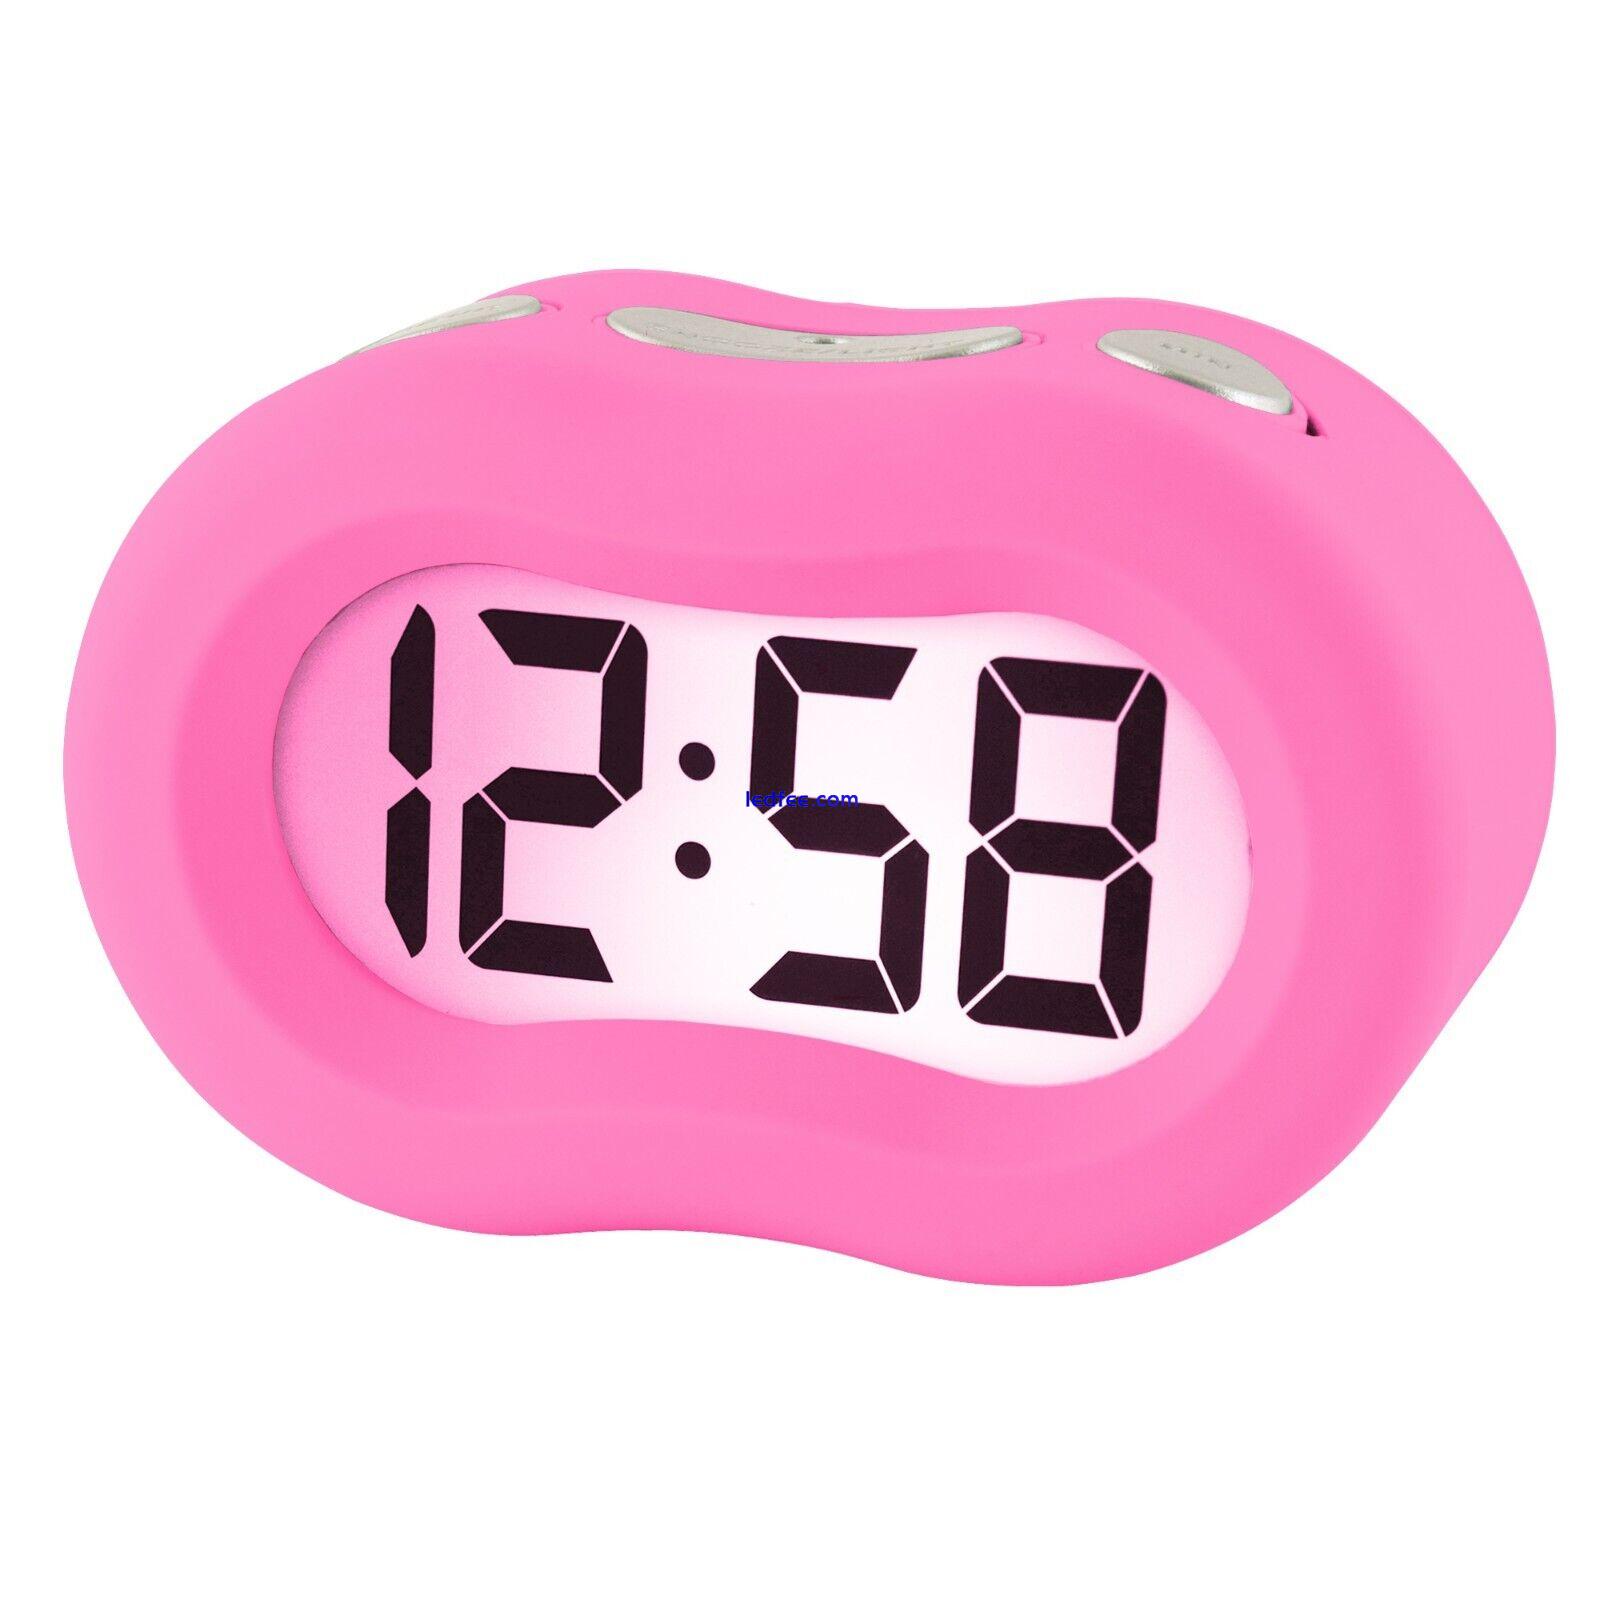 Acctim Vierra Digital Alarm Clock Smartlite� Crescendo Alarm Silicone Case 2 